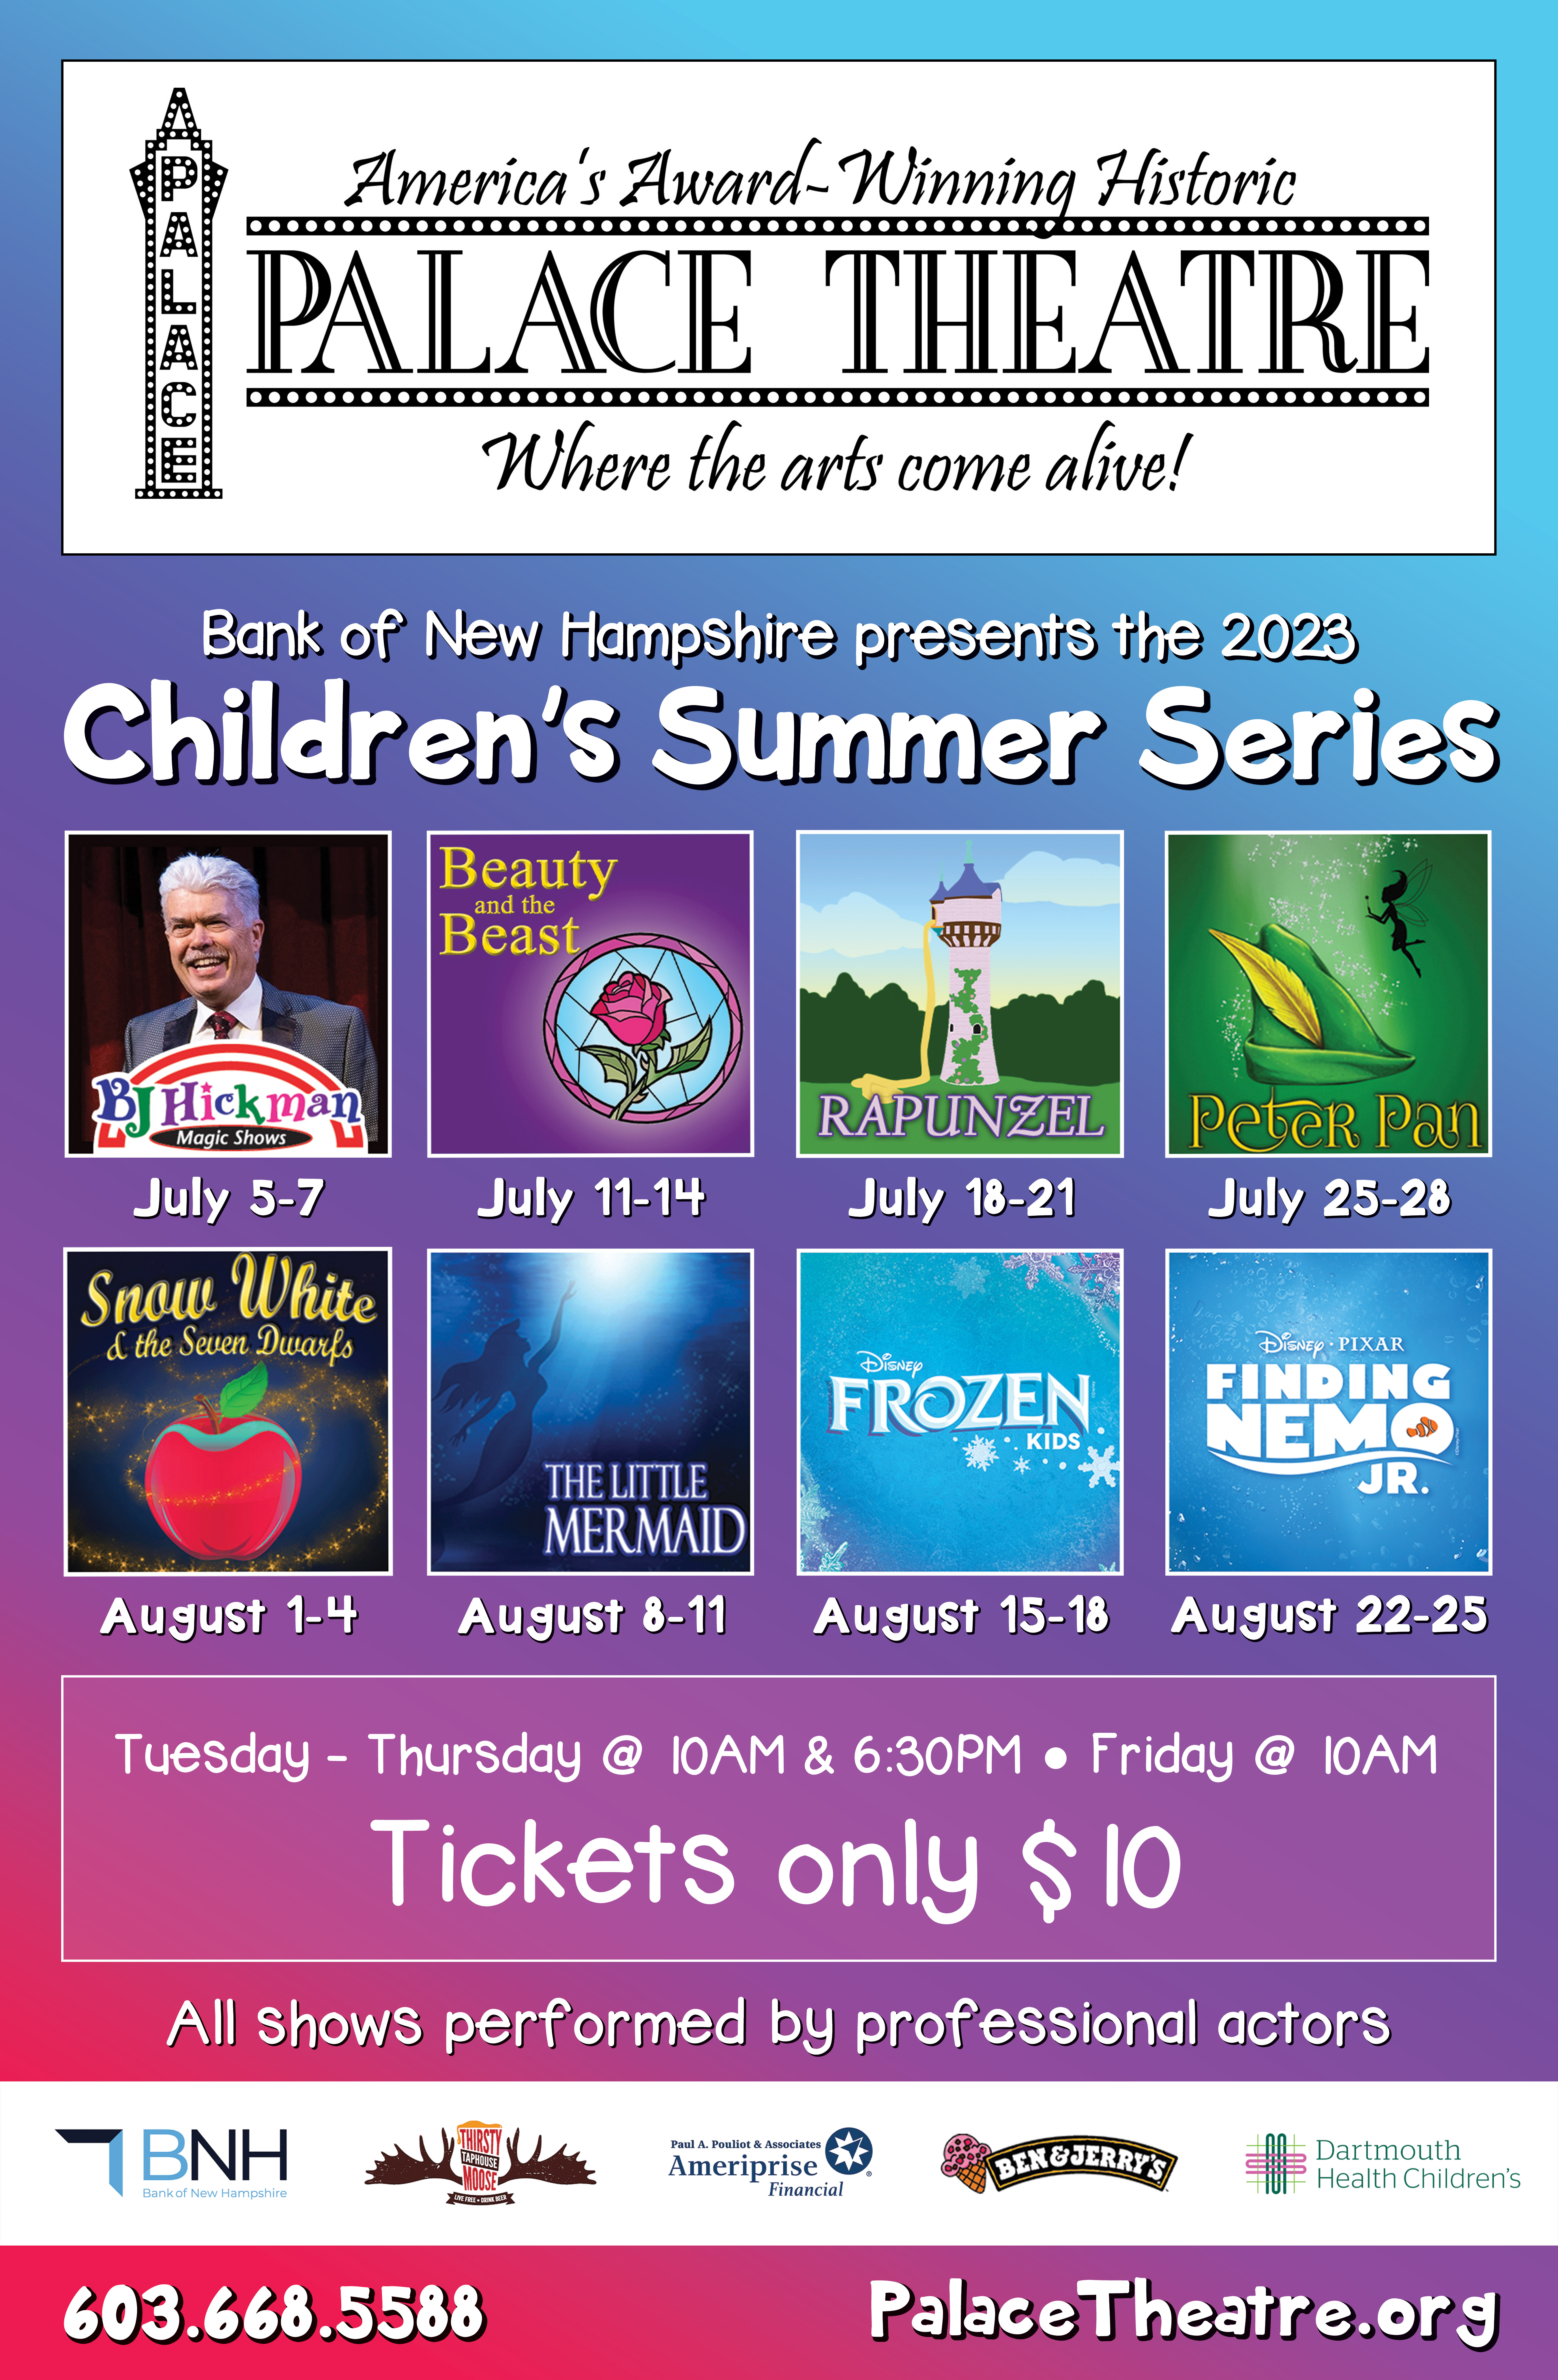 Palace Theatre's Children's Summer Series